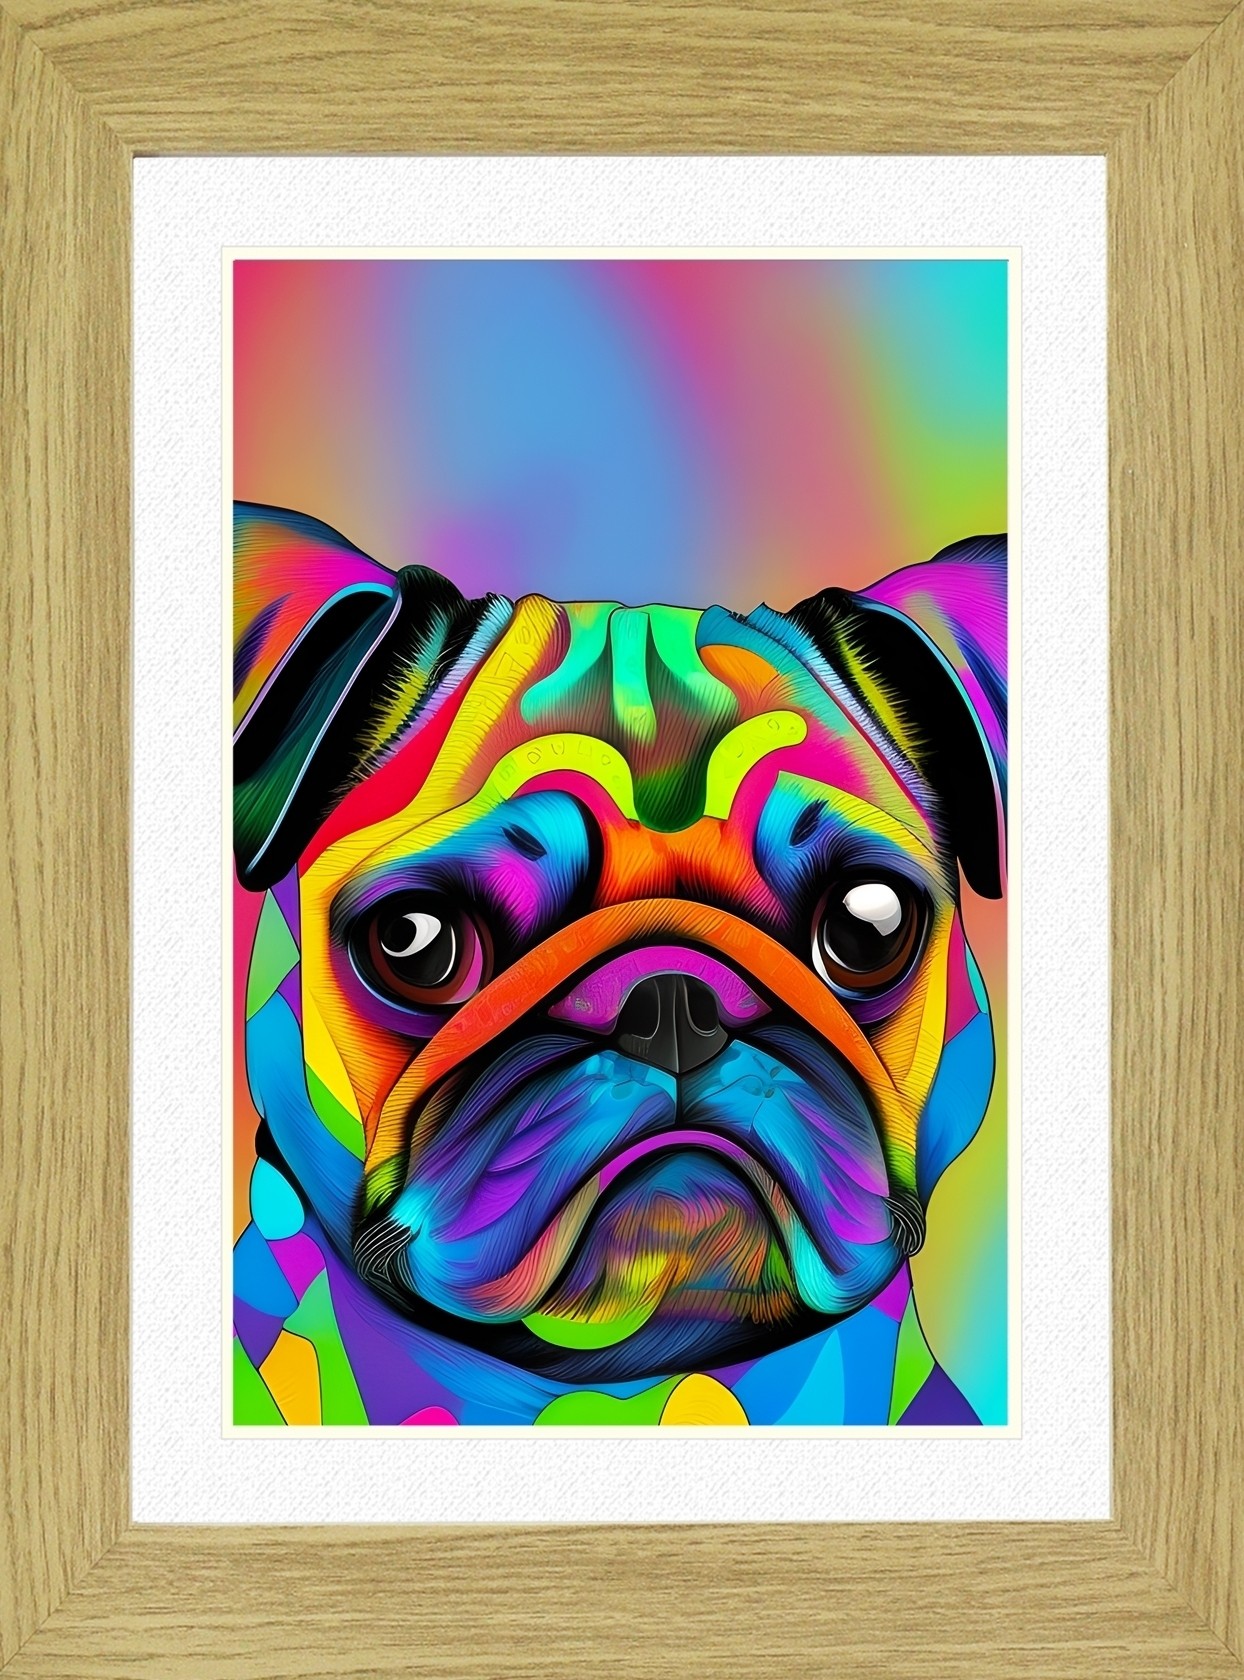 Pug Dog Picture Framed Colourful Abstract Art (30cm x 25cm Light Oak Frame)